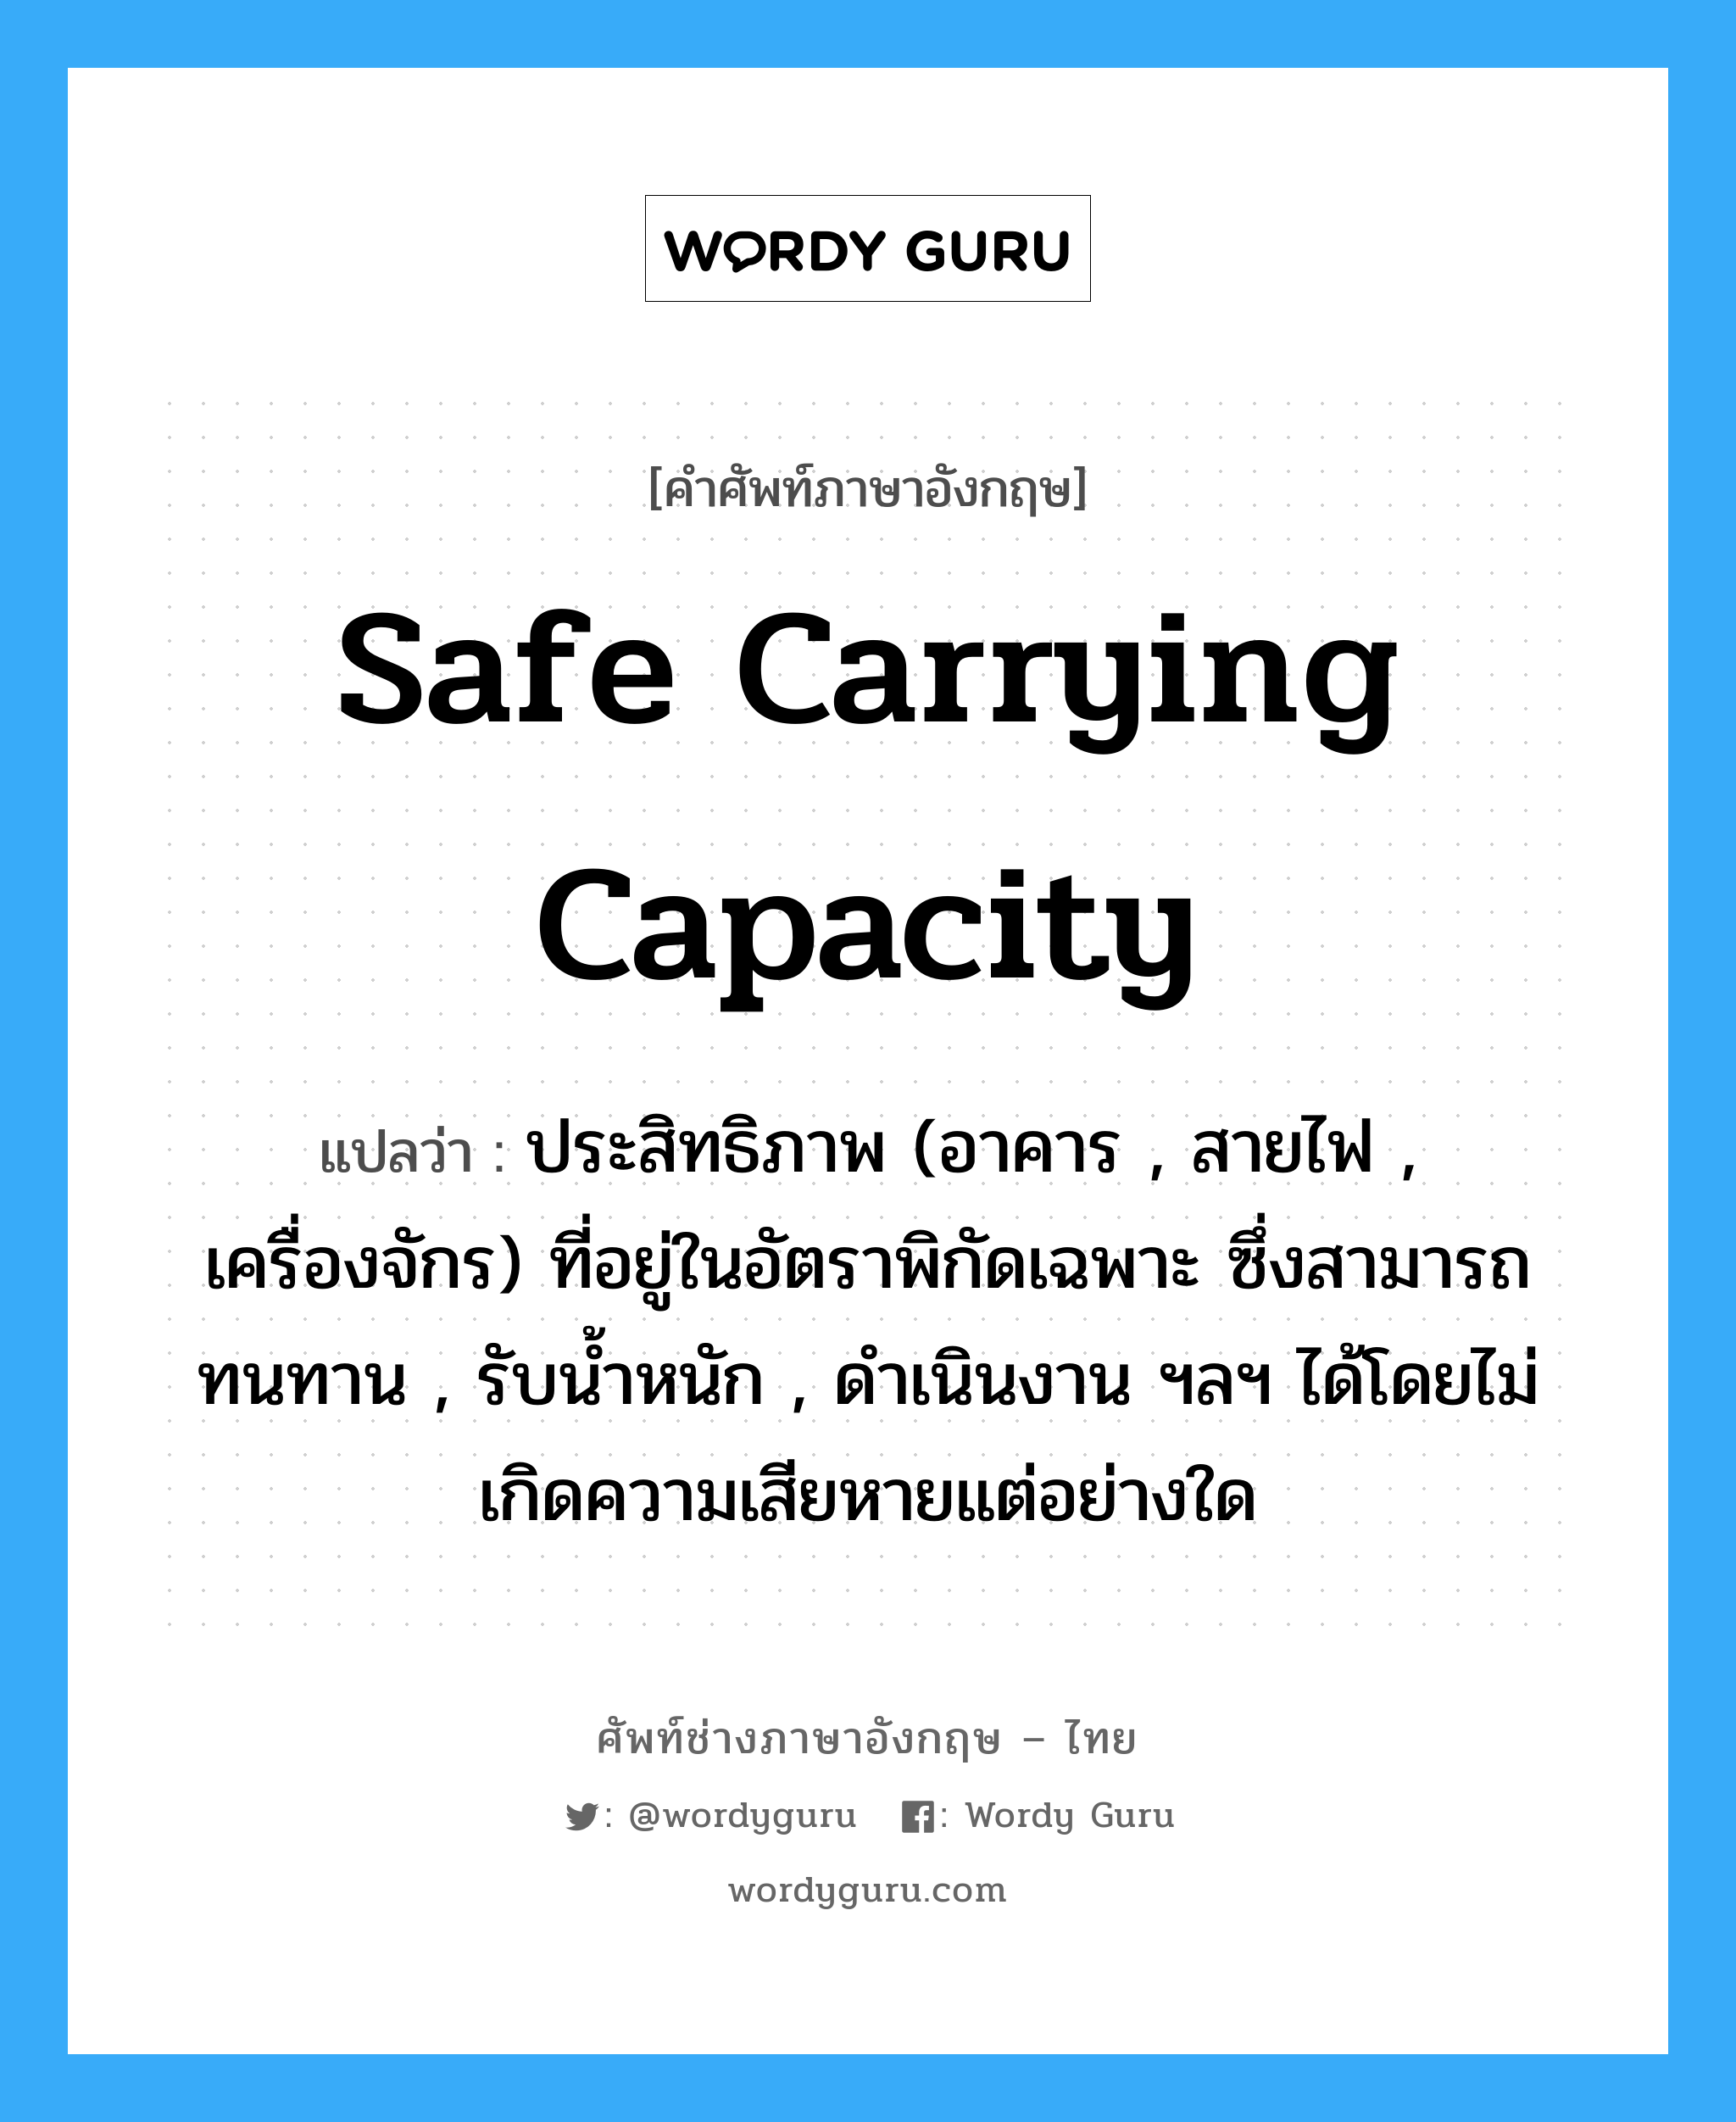 safe carrying capacity แปลว่า?, คำศัพท์ช่างภาษาอังกฤษ - ไทย safe carrying capacity คำศัพท์ภาษาอังกฤษ safe carrying capacity แปลว่า ประสิทธิภาพ (อาคาร , สายไฟ , เครื่องจักร) ที่อยู่ในอัตราพิกัดเฉพาะ ซึ่งสามารถทนทาน , รับน้ำหนัก , ดำเนินงาน ฯลฯ ได้โดยไม่เกิดความเสียหายแต่อย่างใด